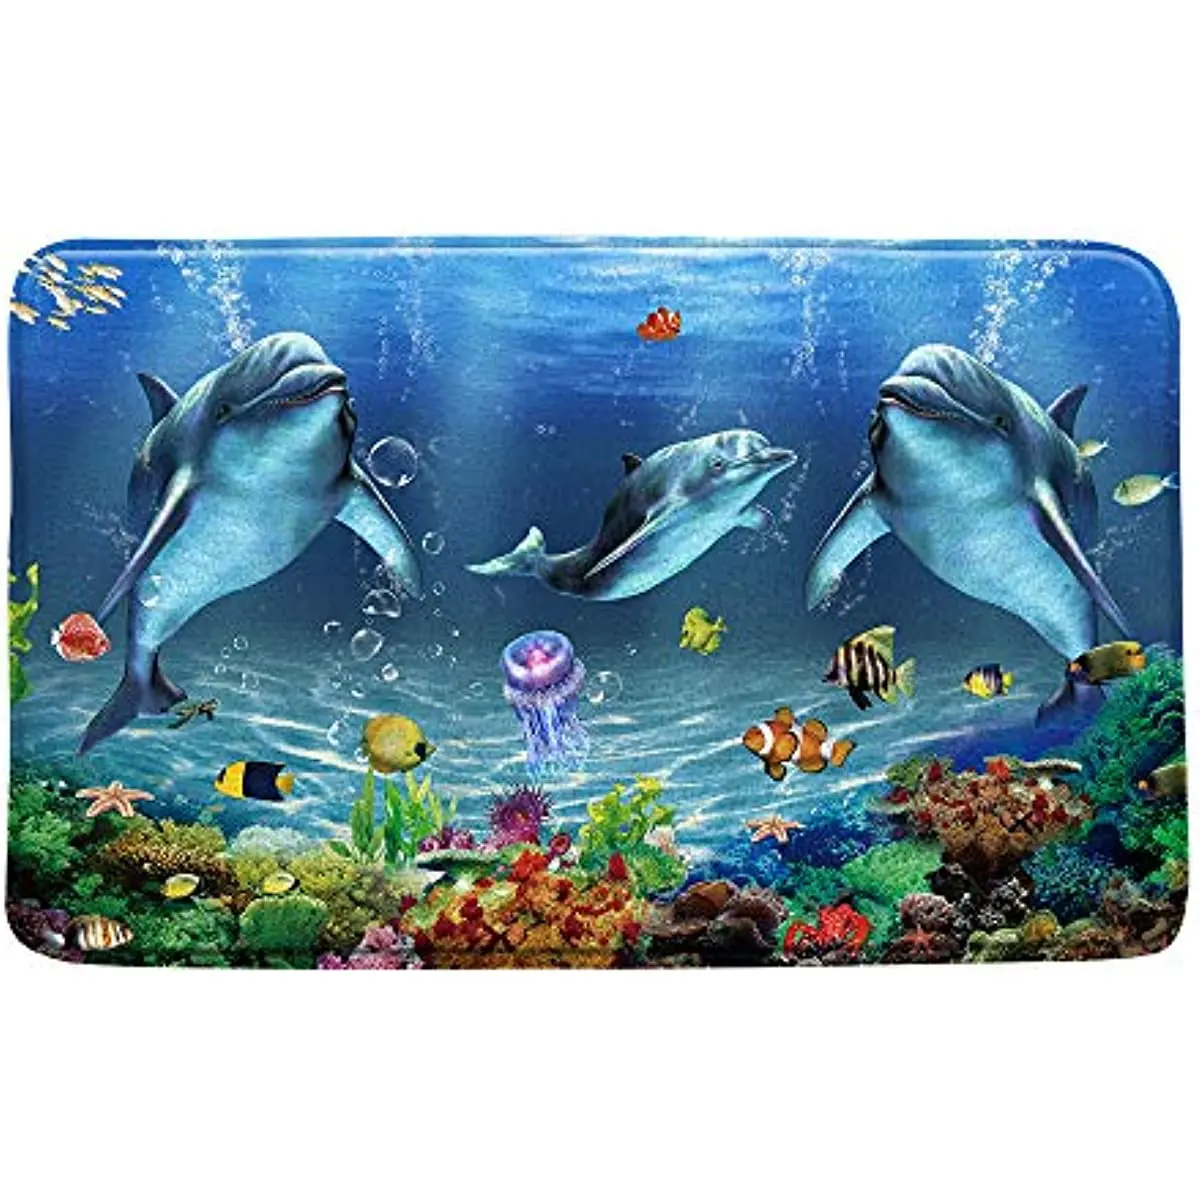 

Dolphin Bath Mat Blue Ocean Animal Seabed Landscape Tropical Fish Underwater World Boys Girls Bathroom Decor Indoor Carpet